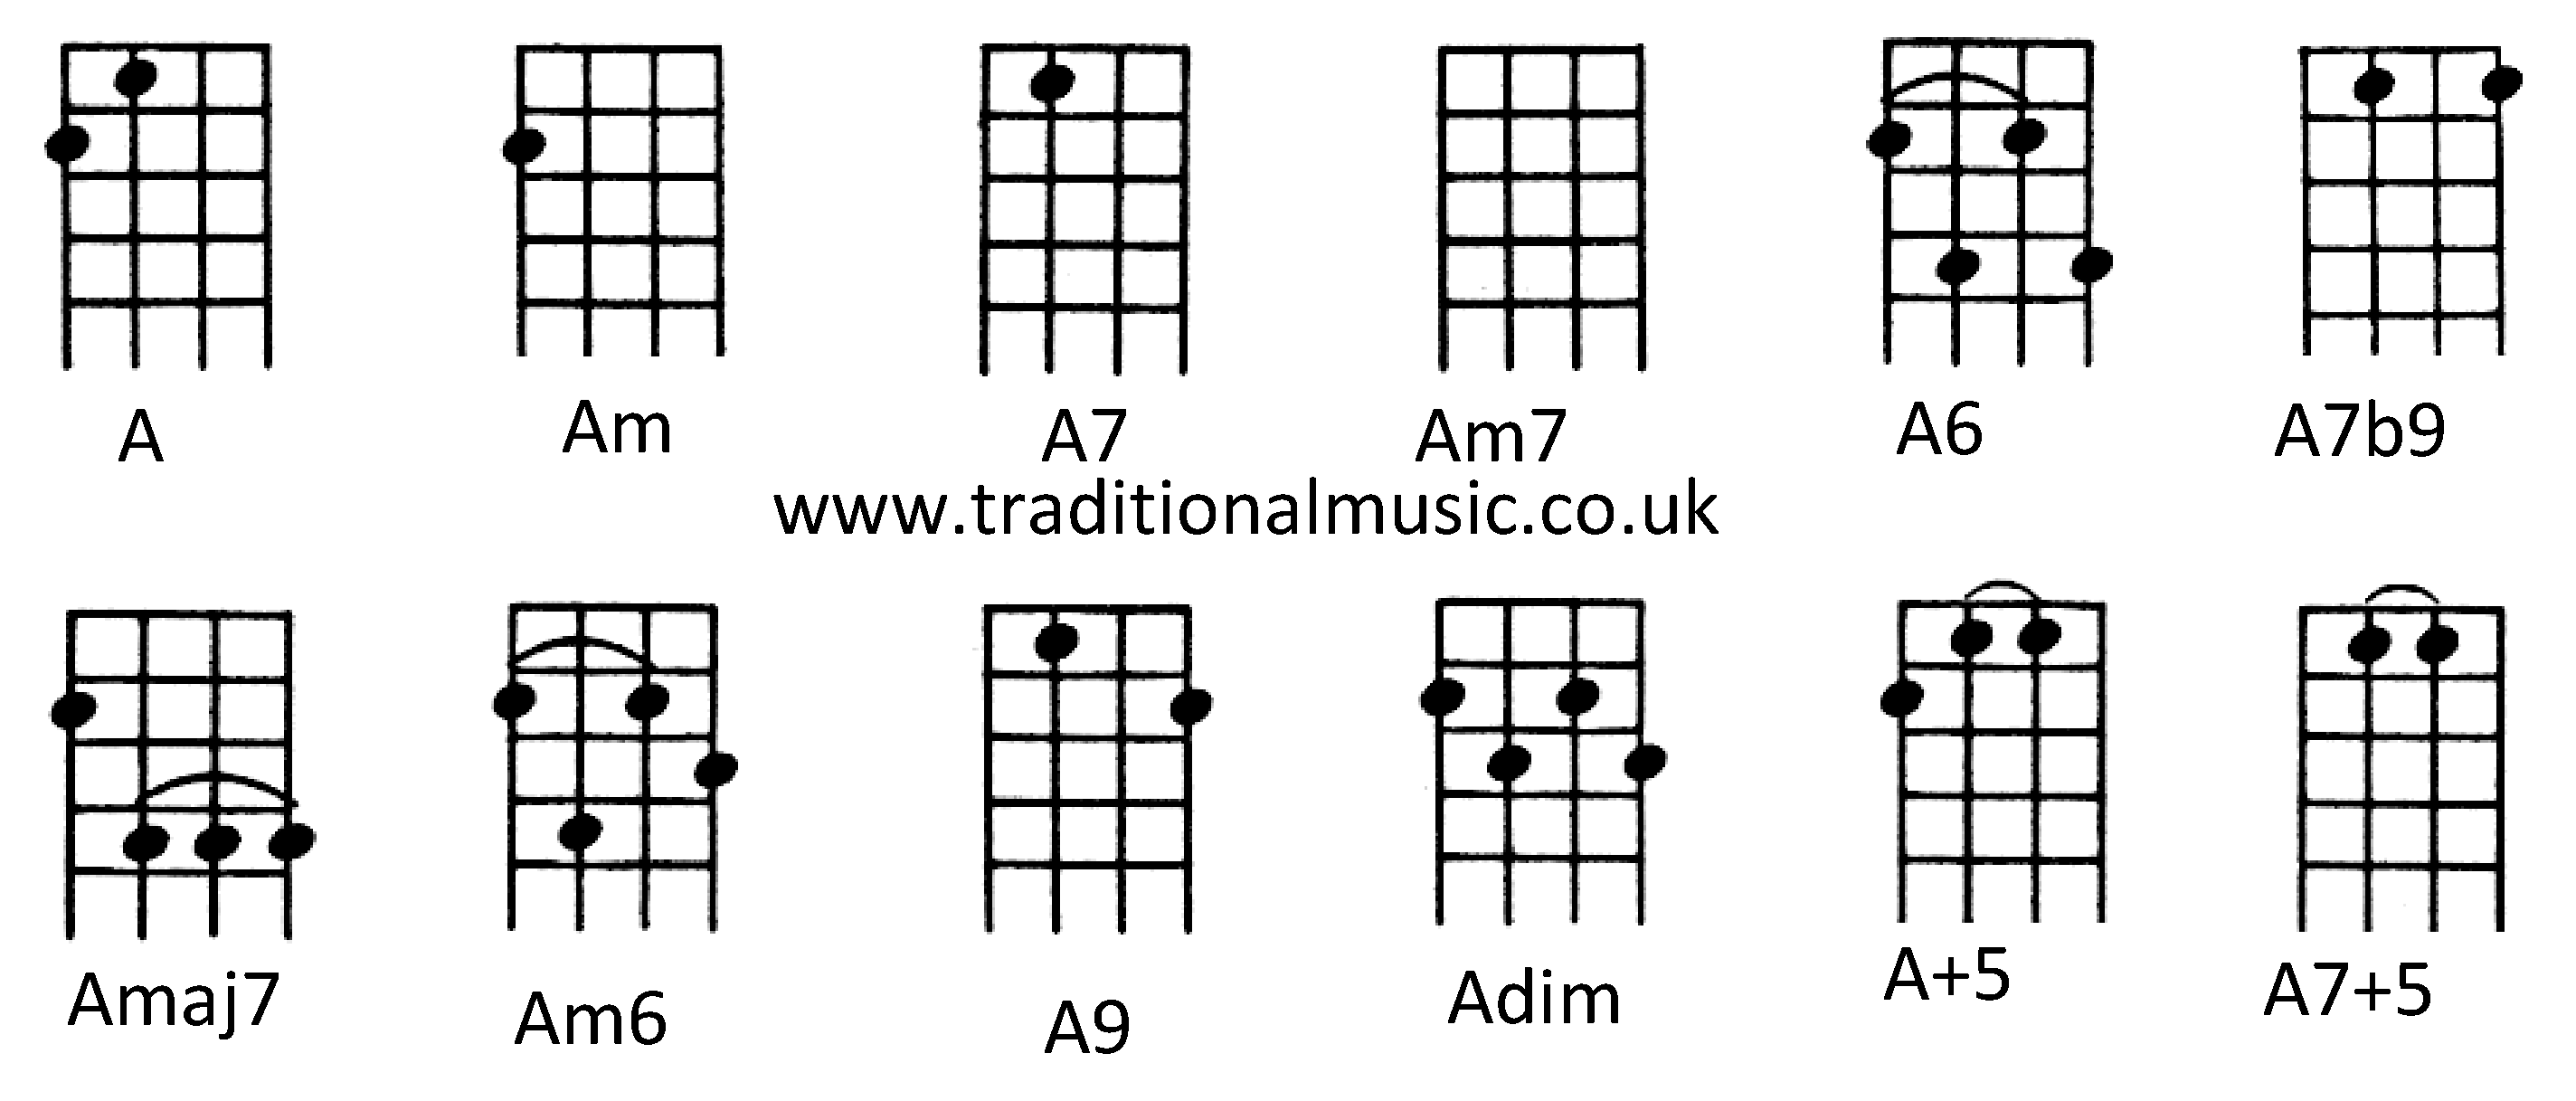 Chords for Ukulele - A Am A7 Am7 A6 Amaj7 Am6 A9 Adim A+5 A7b9 A7+5.